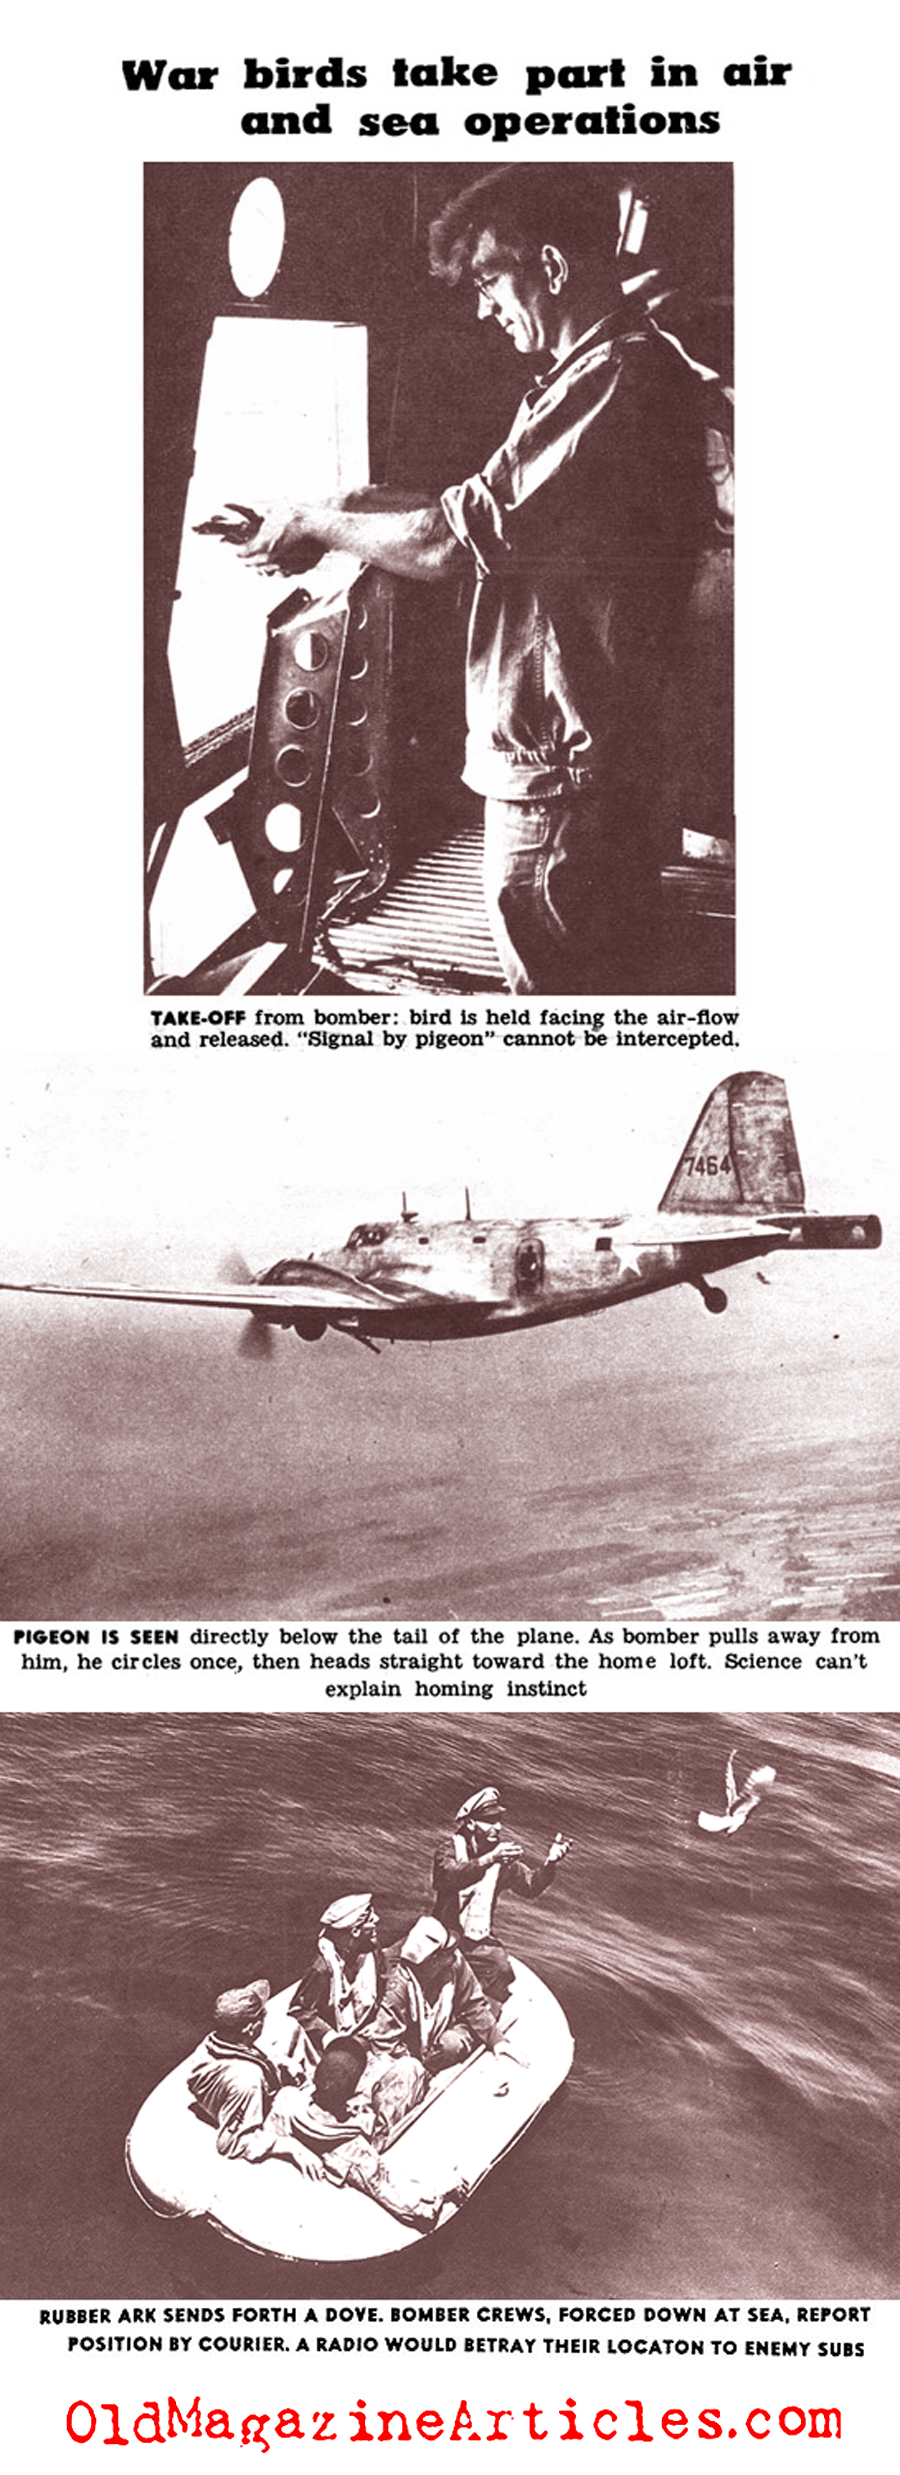 U.S. Army Carrier Pigeons of World War II (Click Magazine, 1943)